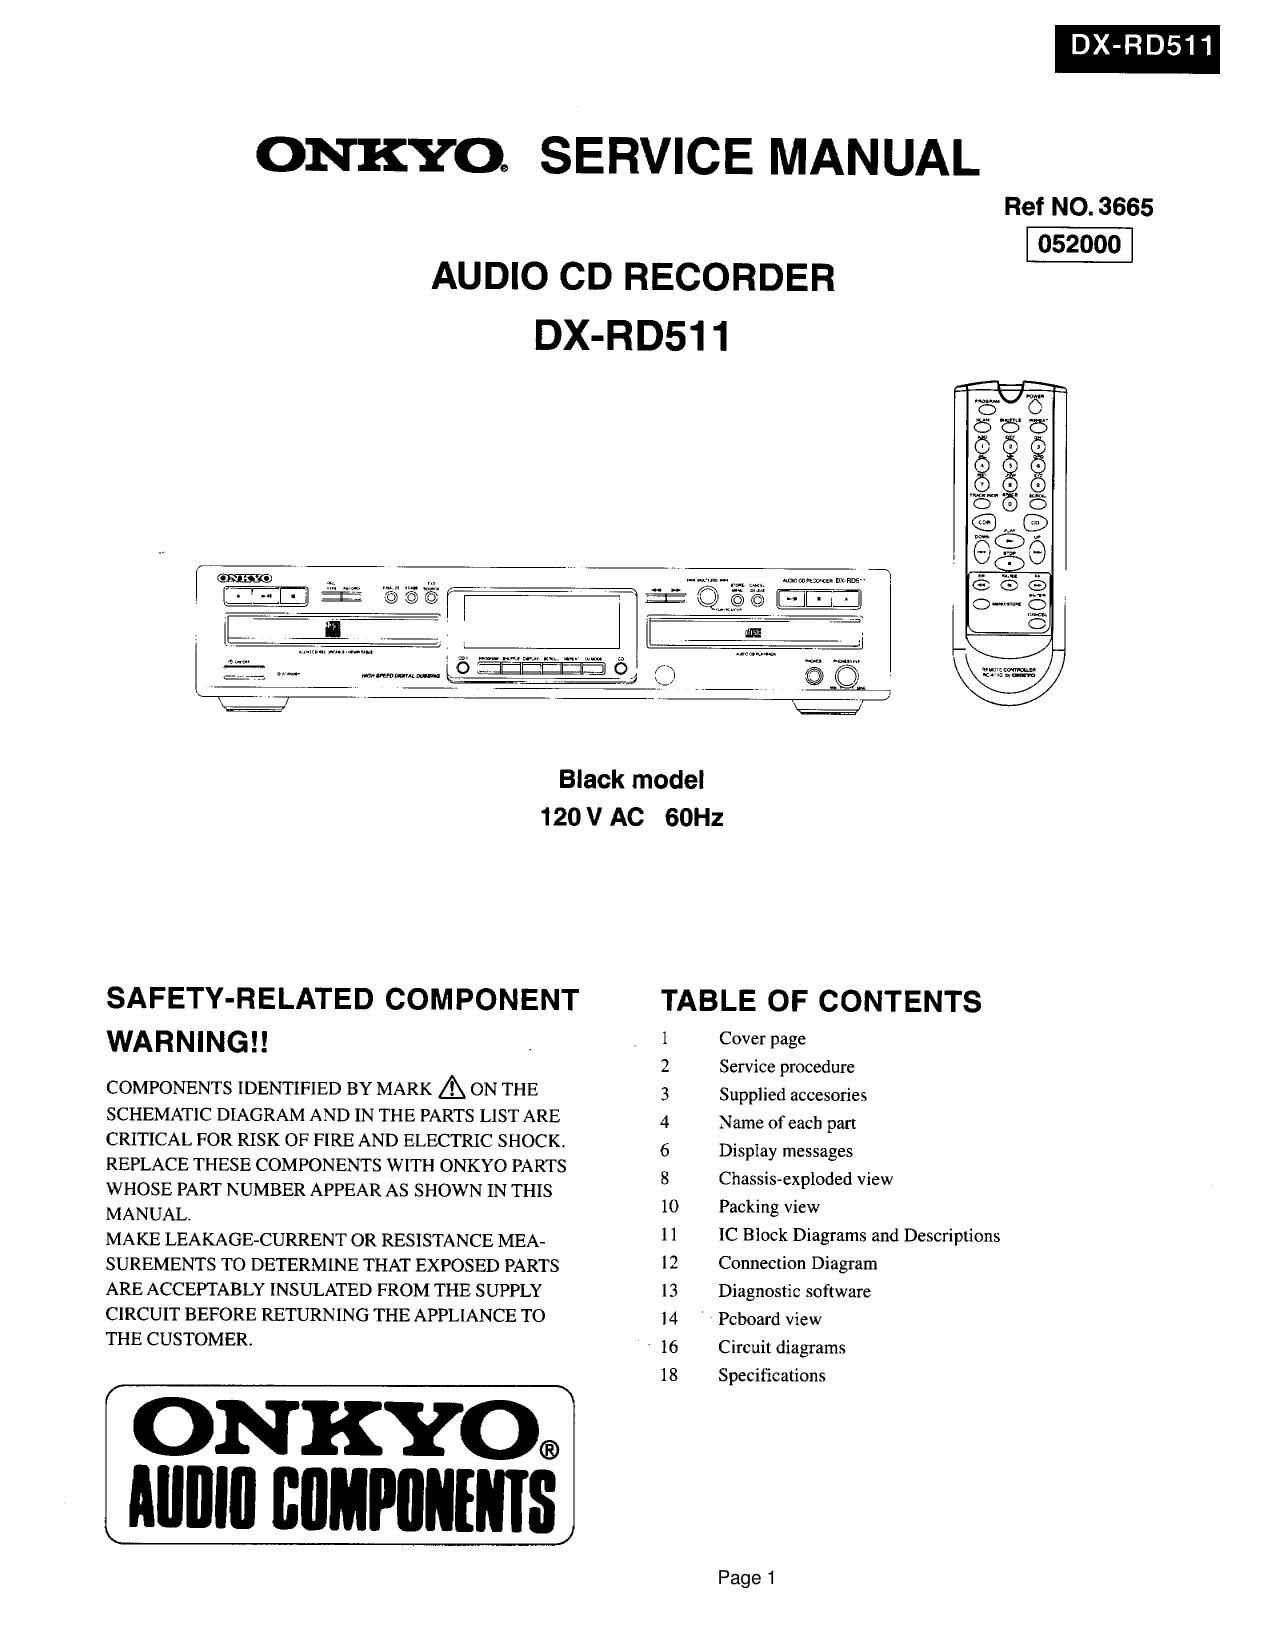 Onkyo DXRD 511 Service Manual